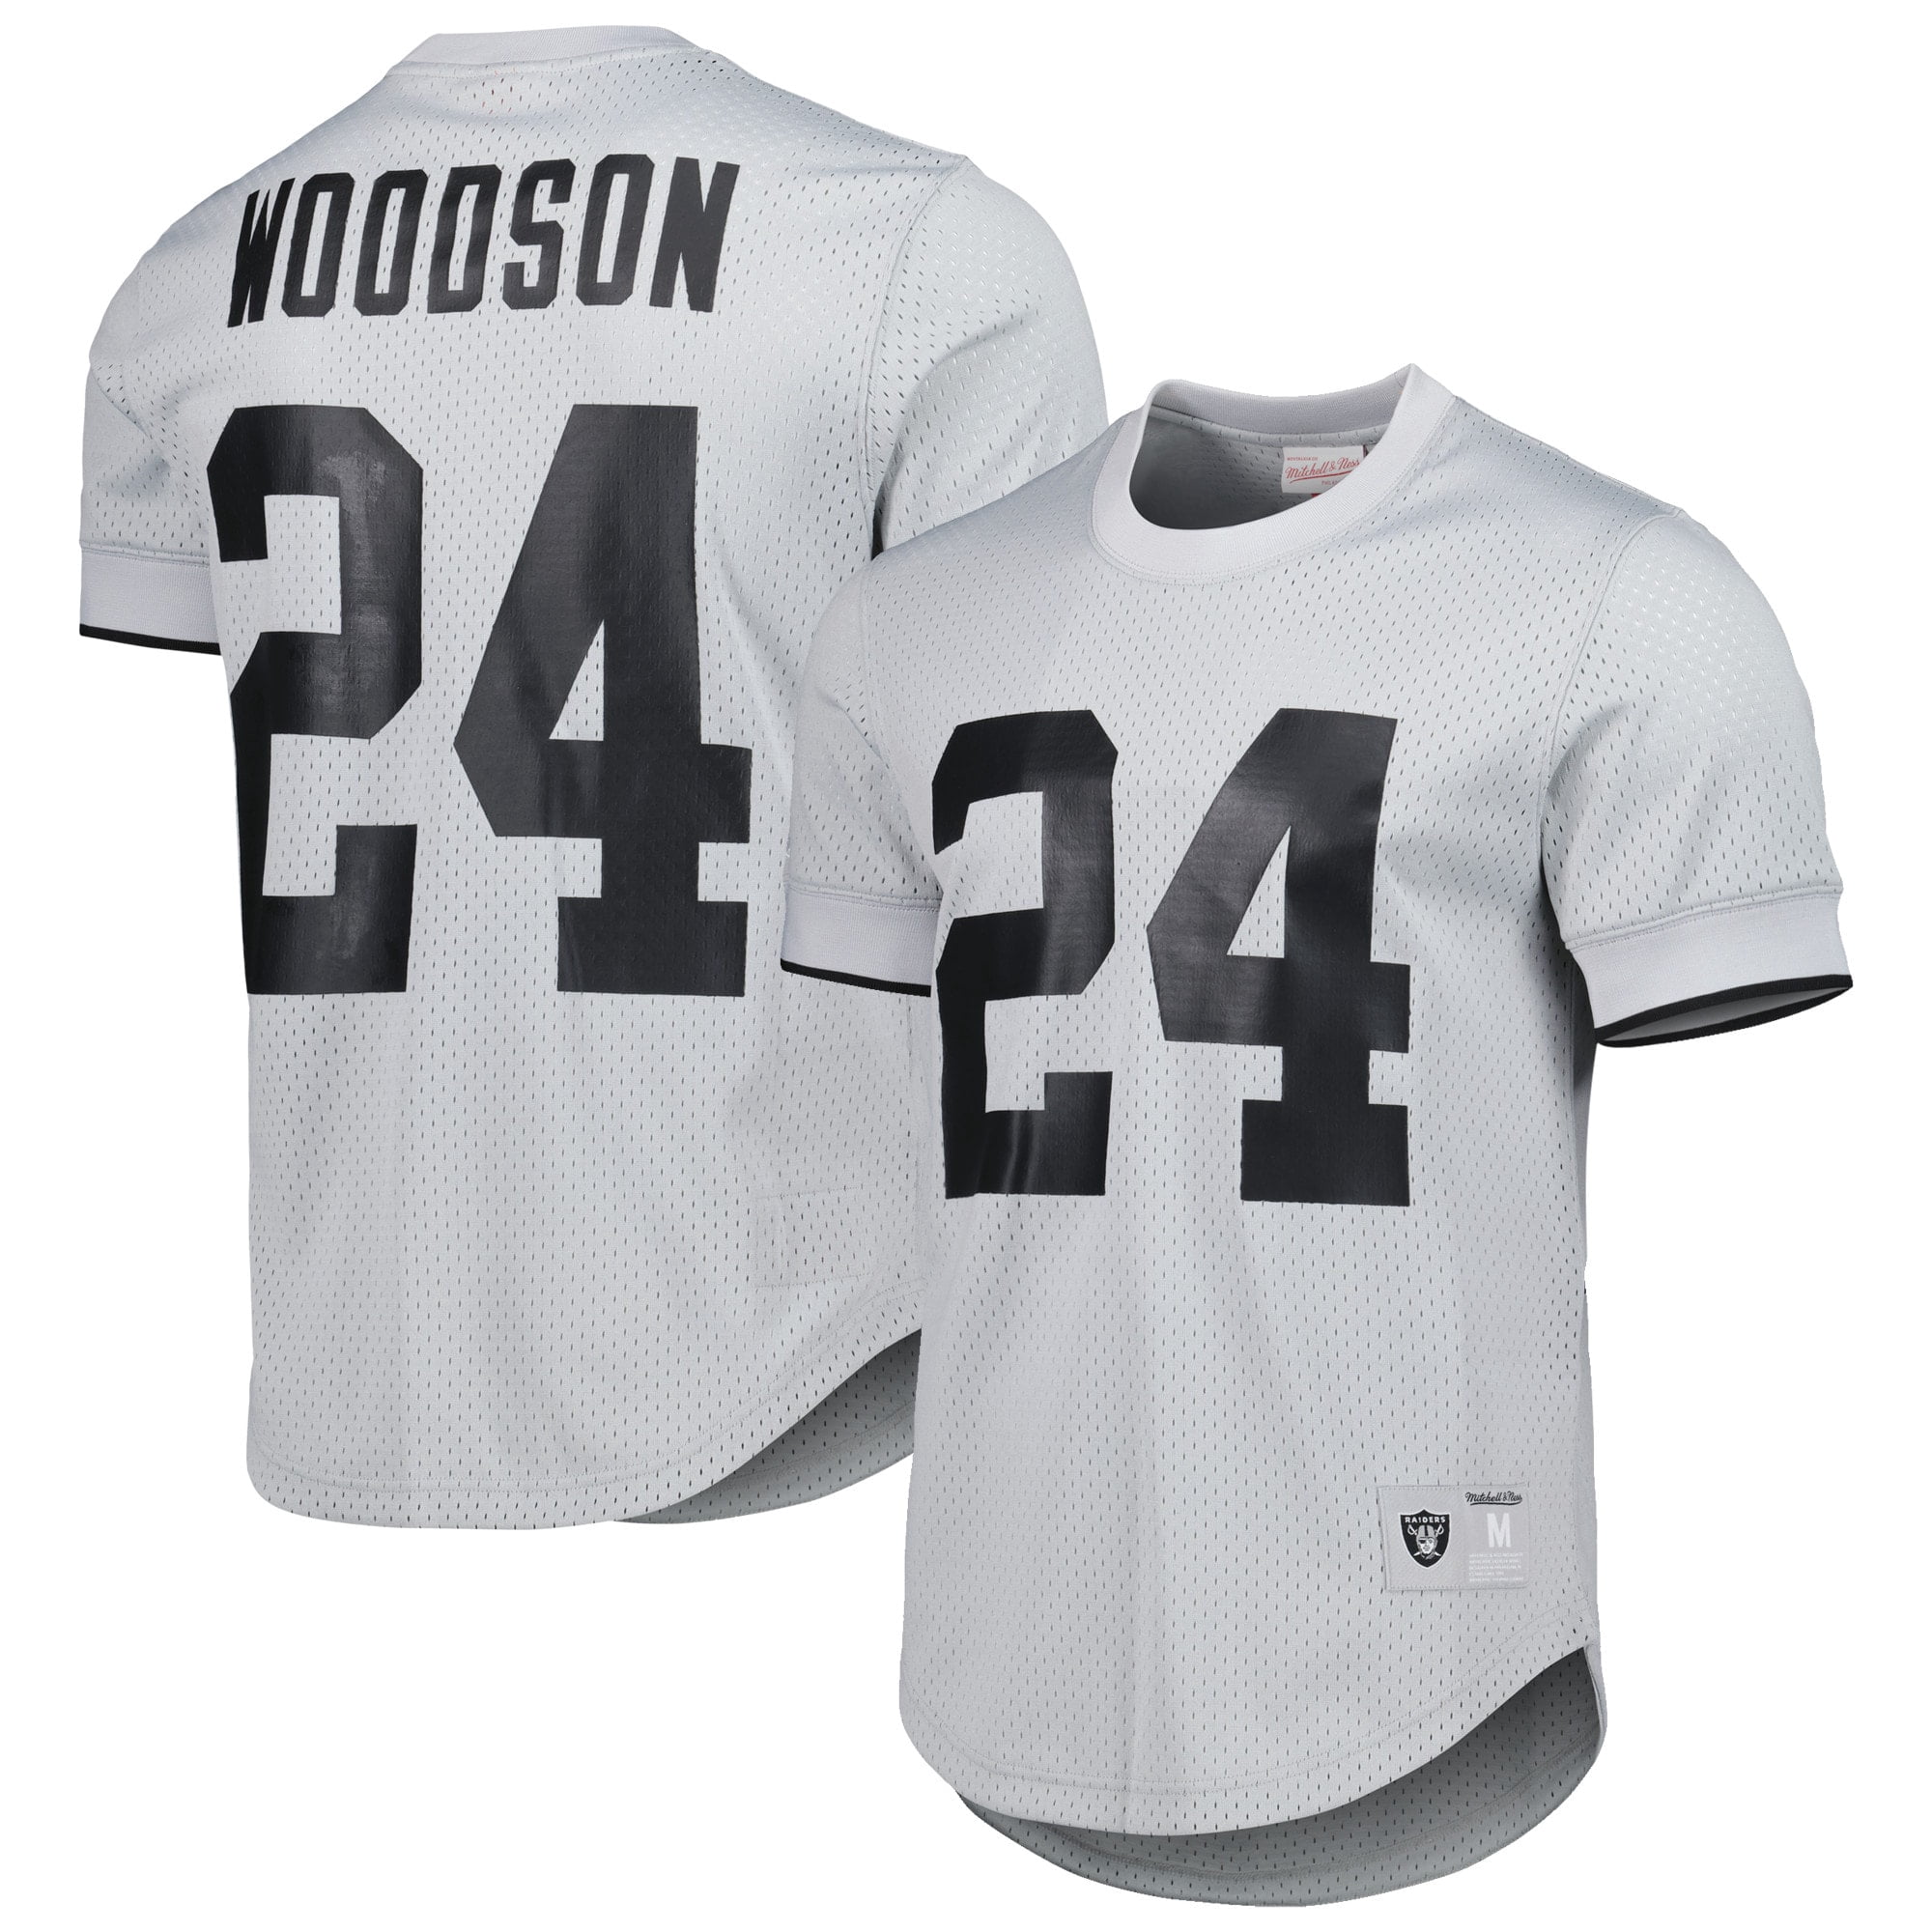 woodson 24 raiders jersey